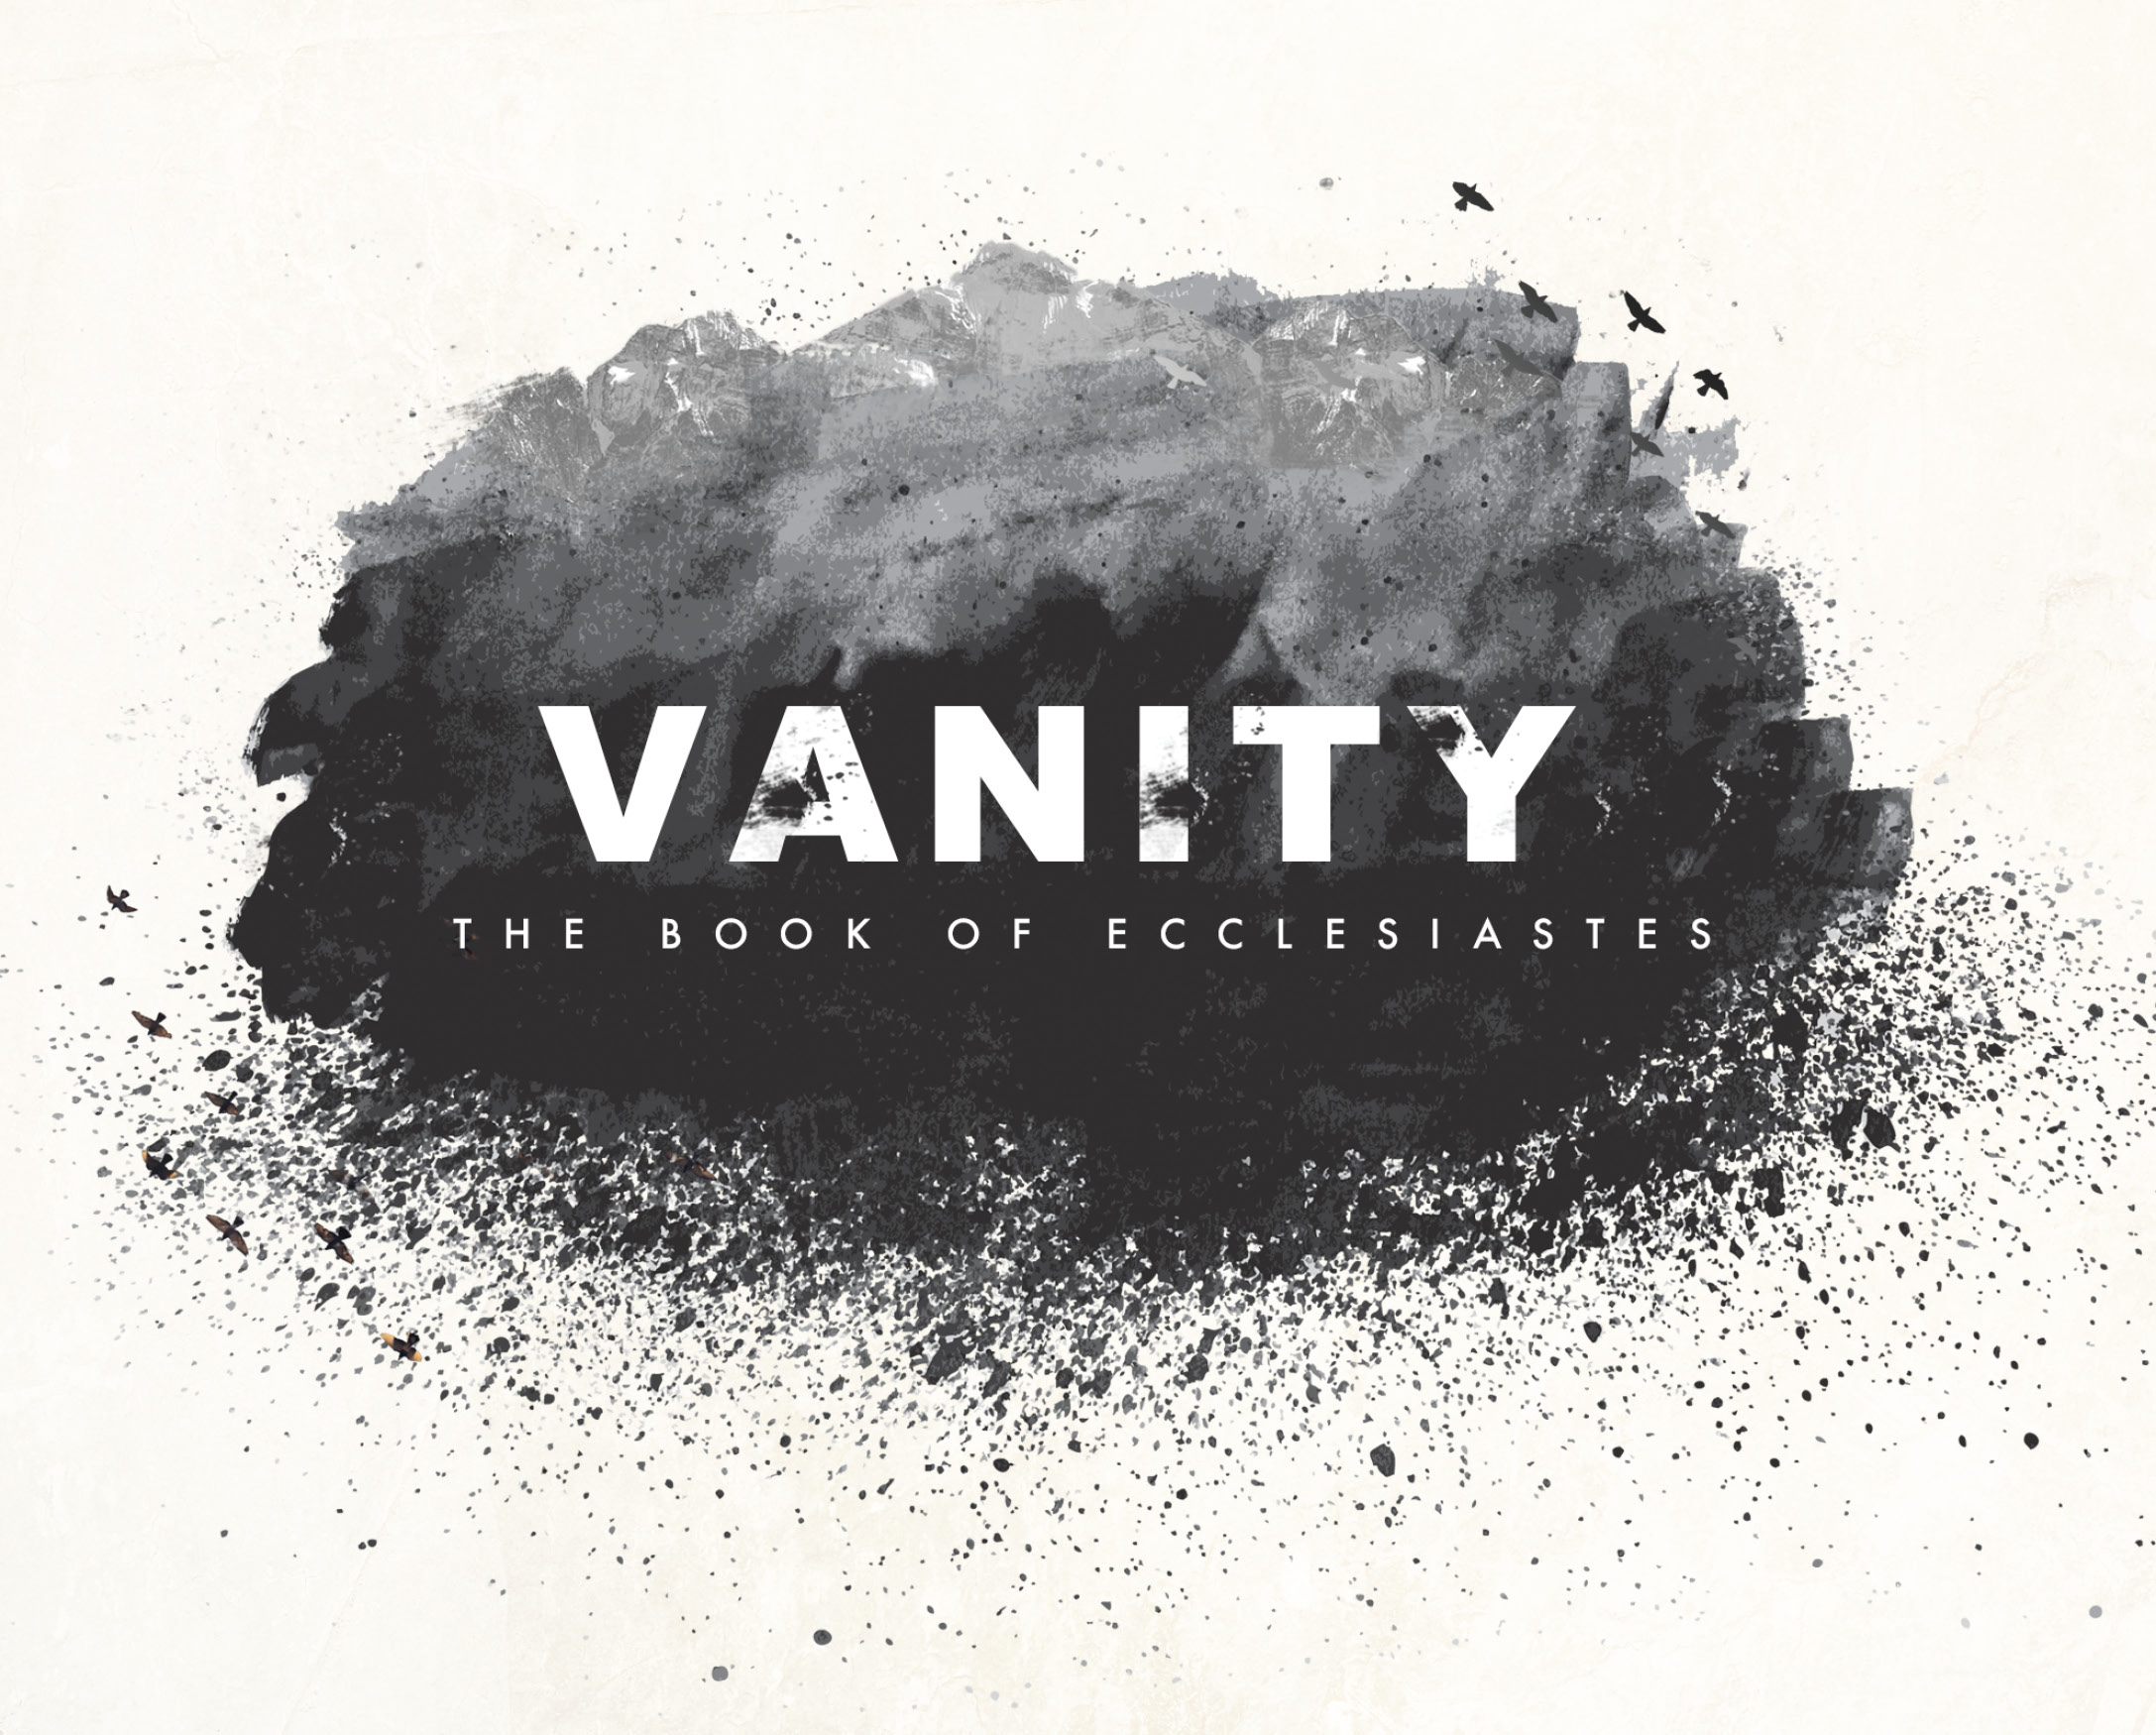 Vanity: Wisdom’s Limits and Life’s Purpose